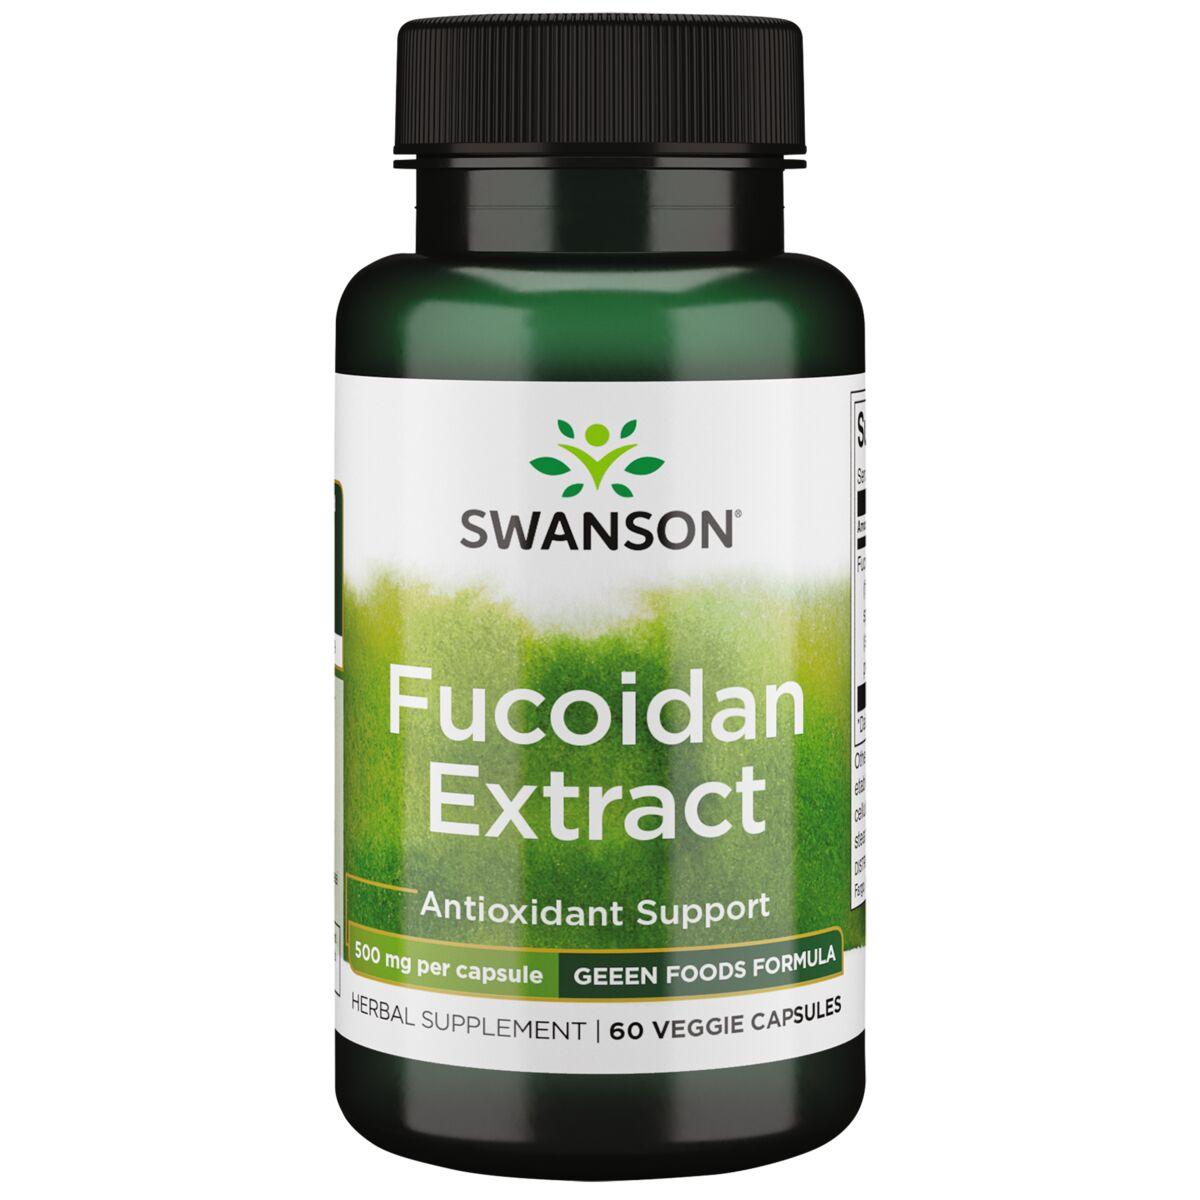 Swanson GreenFoods Formulas Fucoidan Extract Supplement Vitamin | 500 mg | 60 Veg Caps